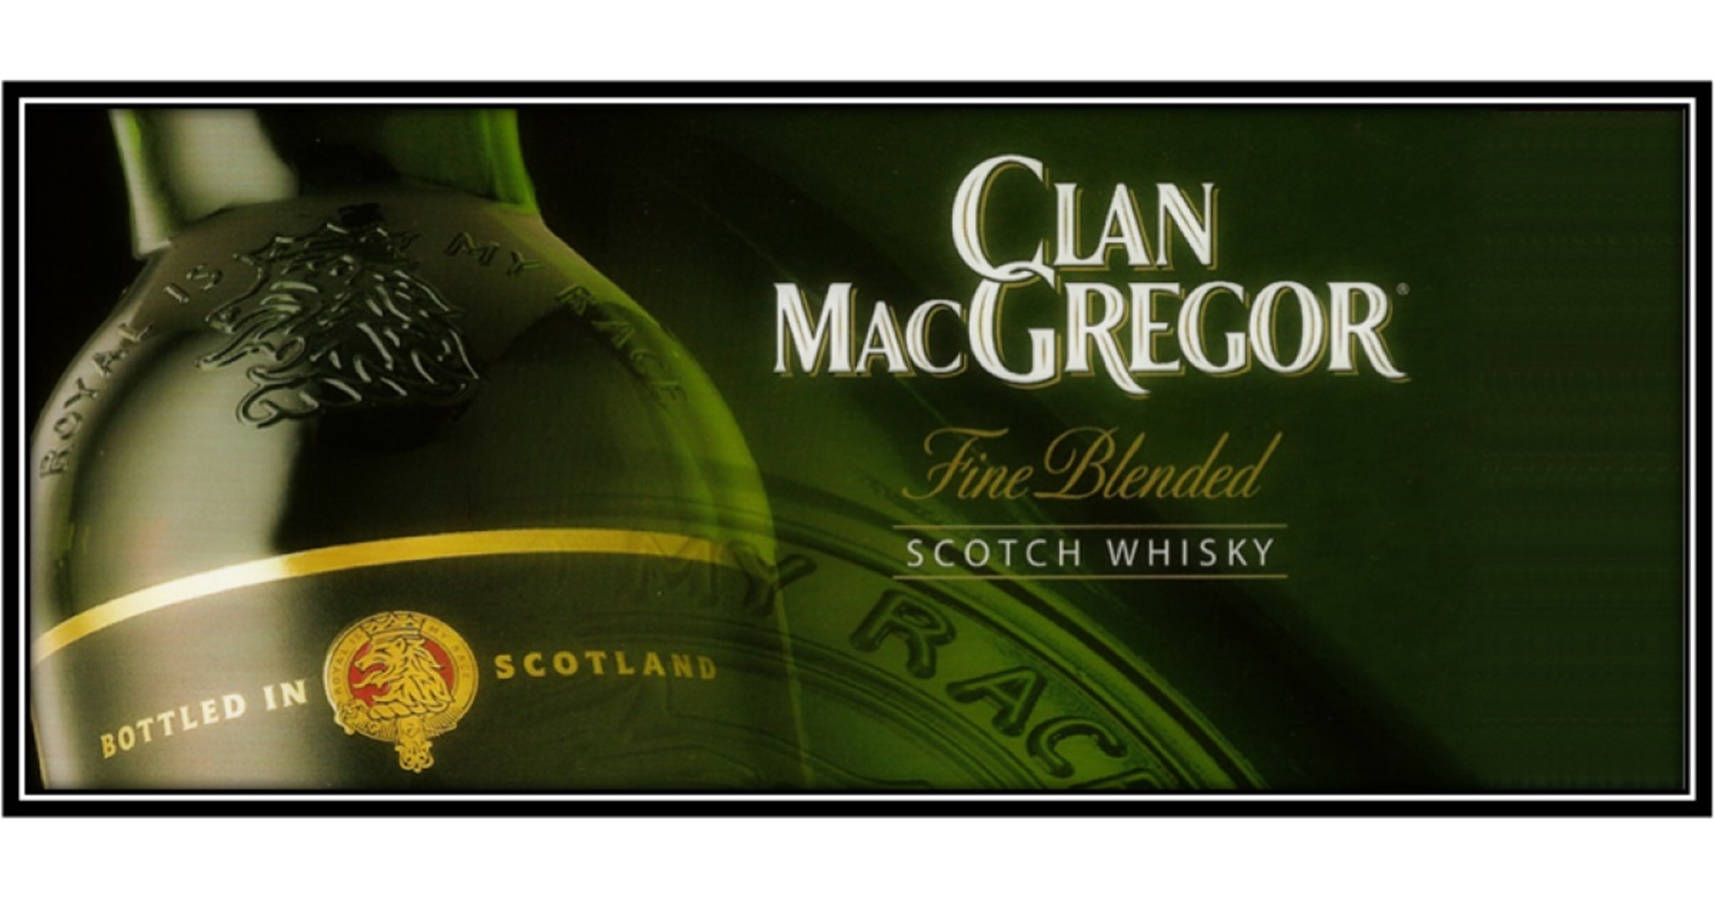 Clan Macgregor Scotch 1714 X 900 Wallpaper